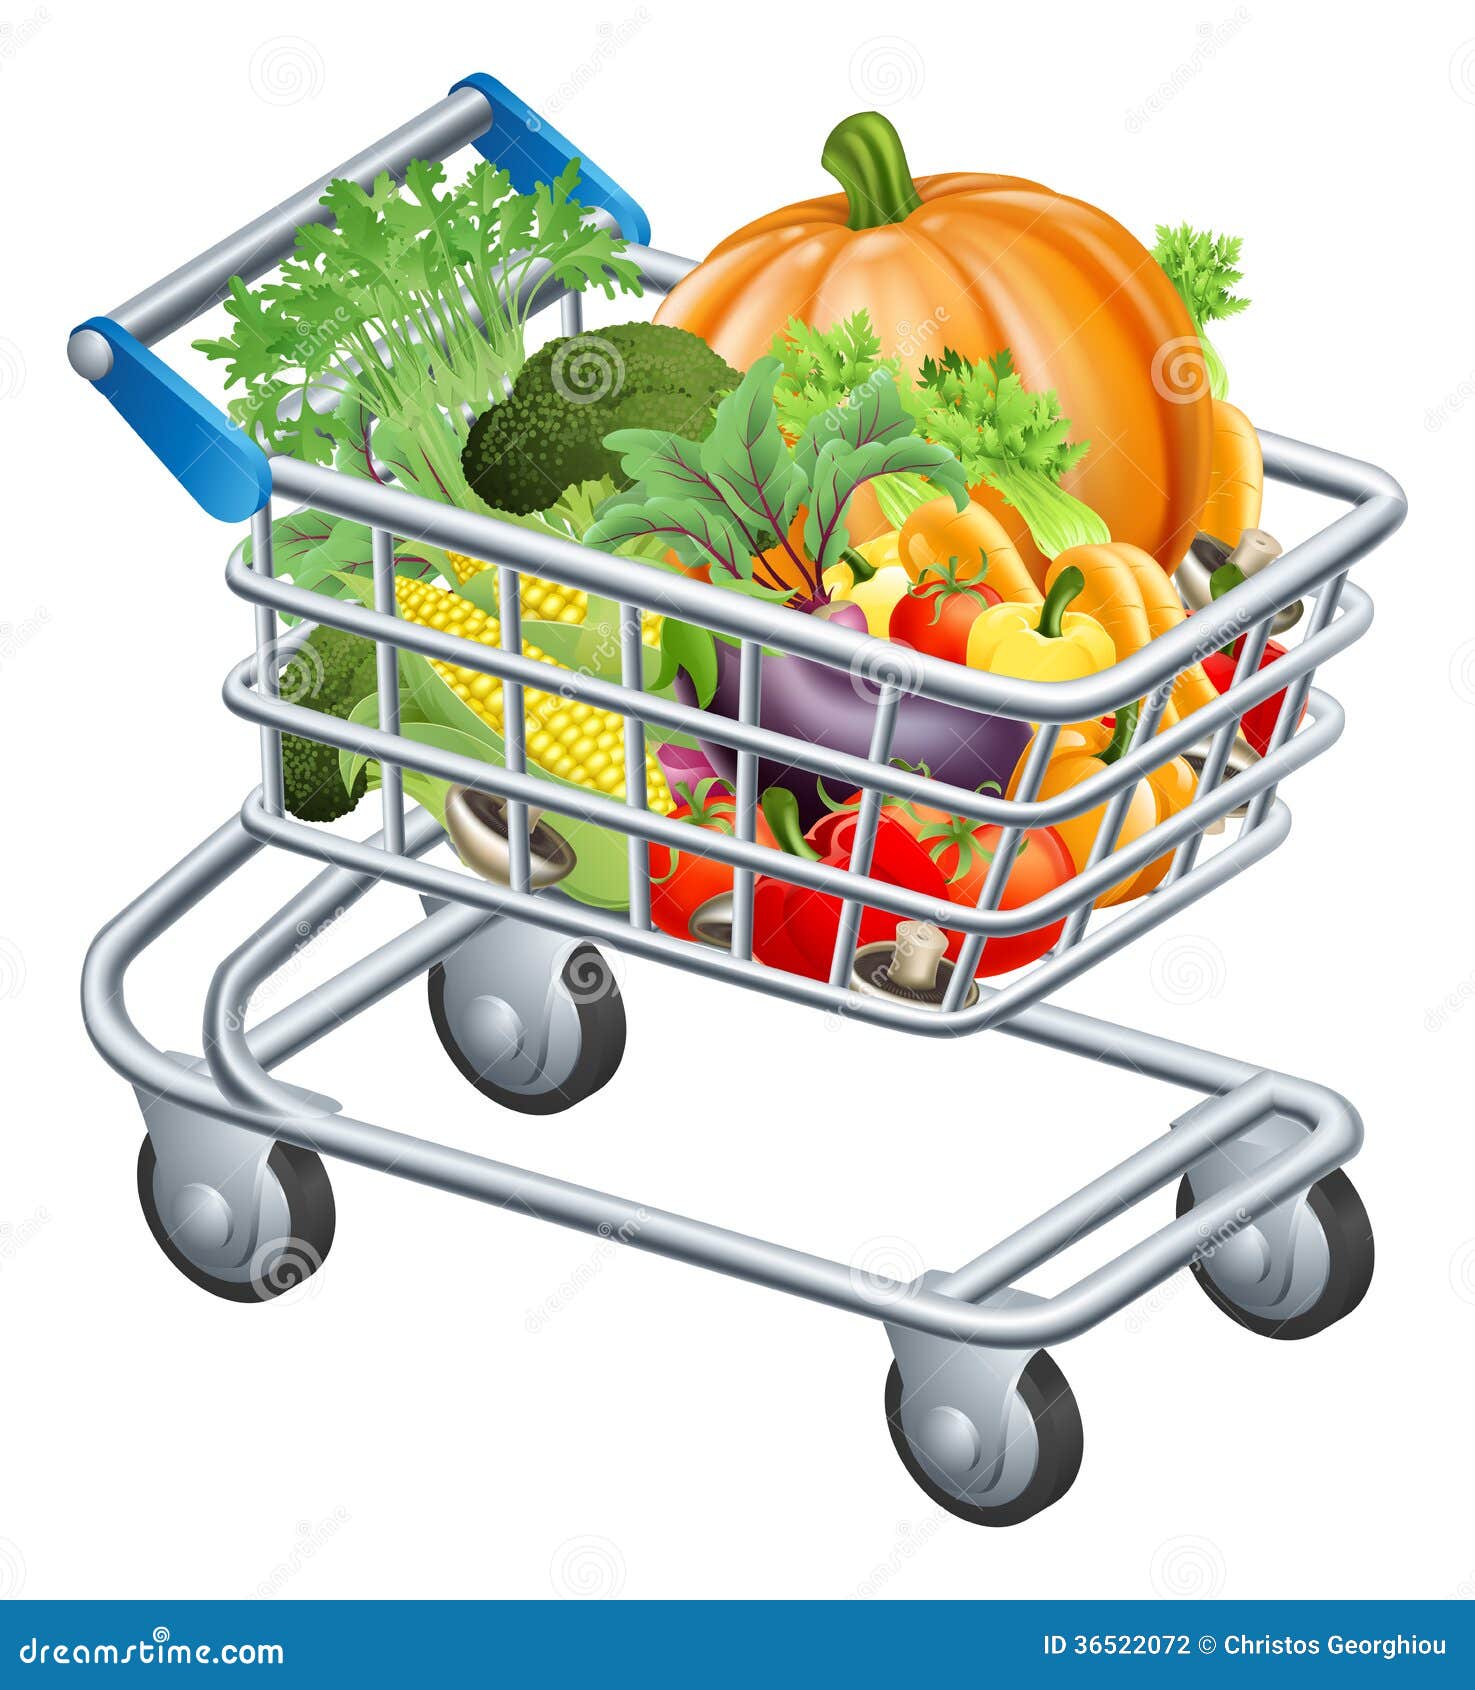 Vegetable trolley stock vector. Illustration of market - 36522072